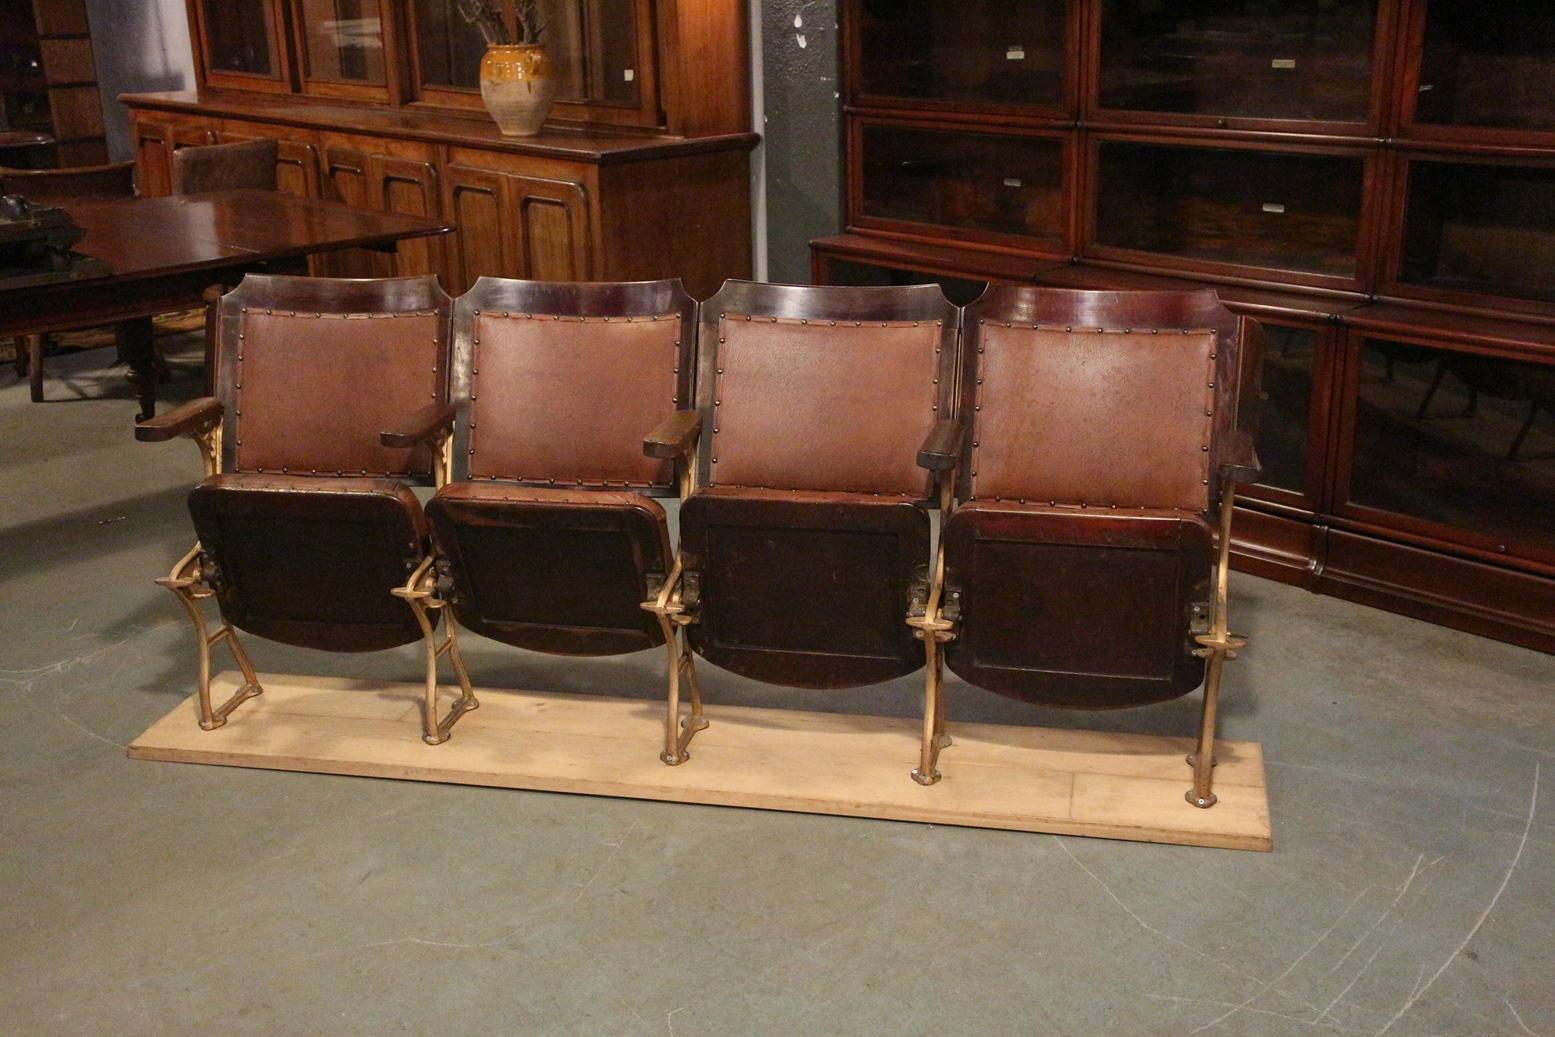 British Original Old Theater Seats